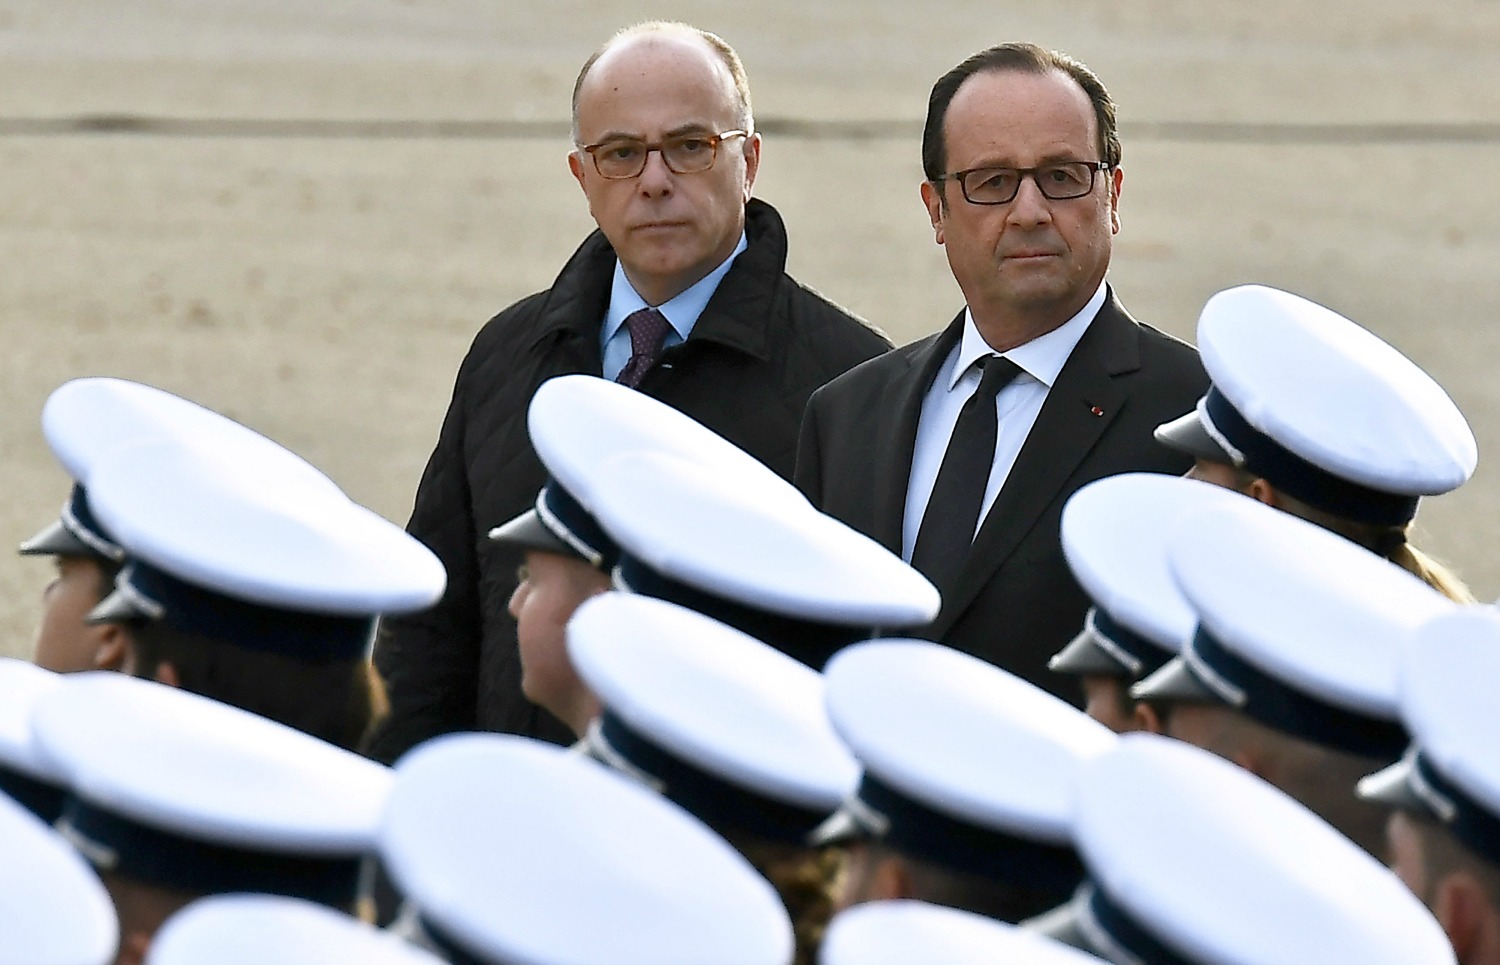 Bernard Cazeneuve sustituye a Valls como primer ministro francés